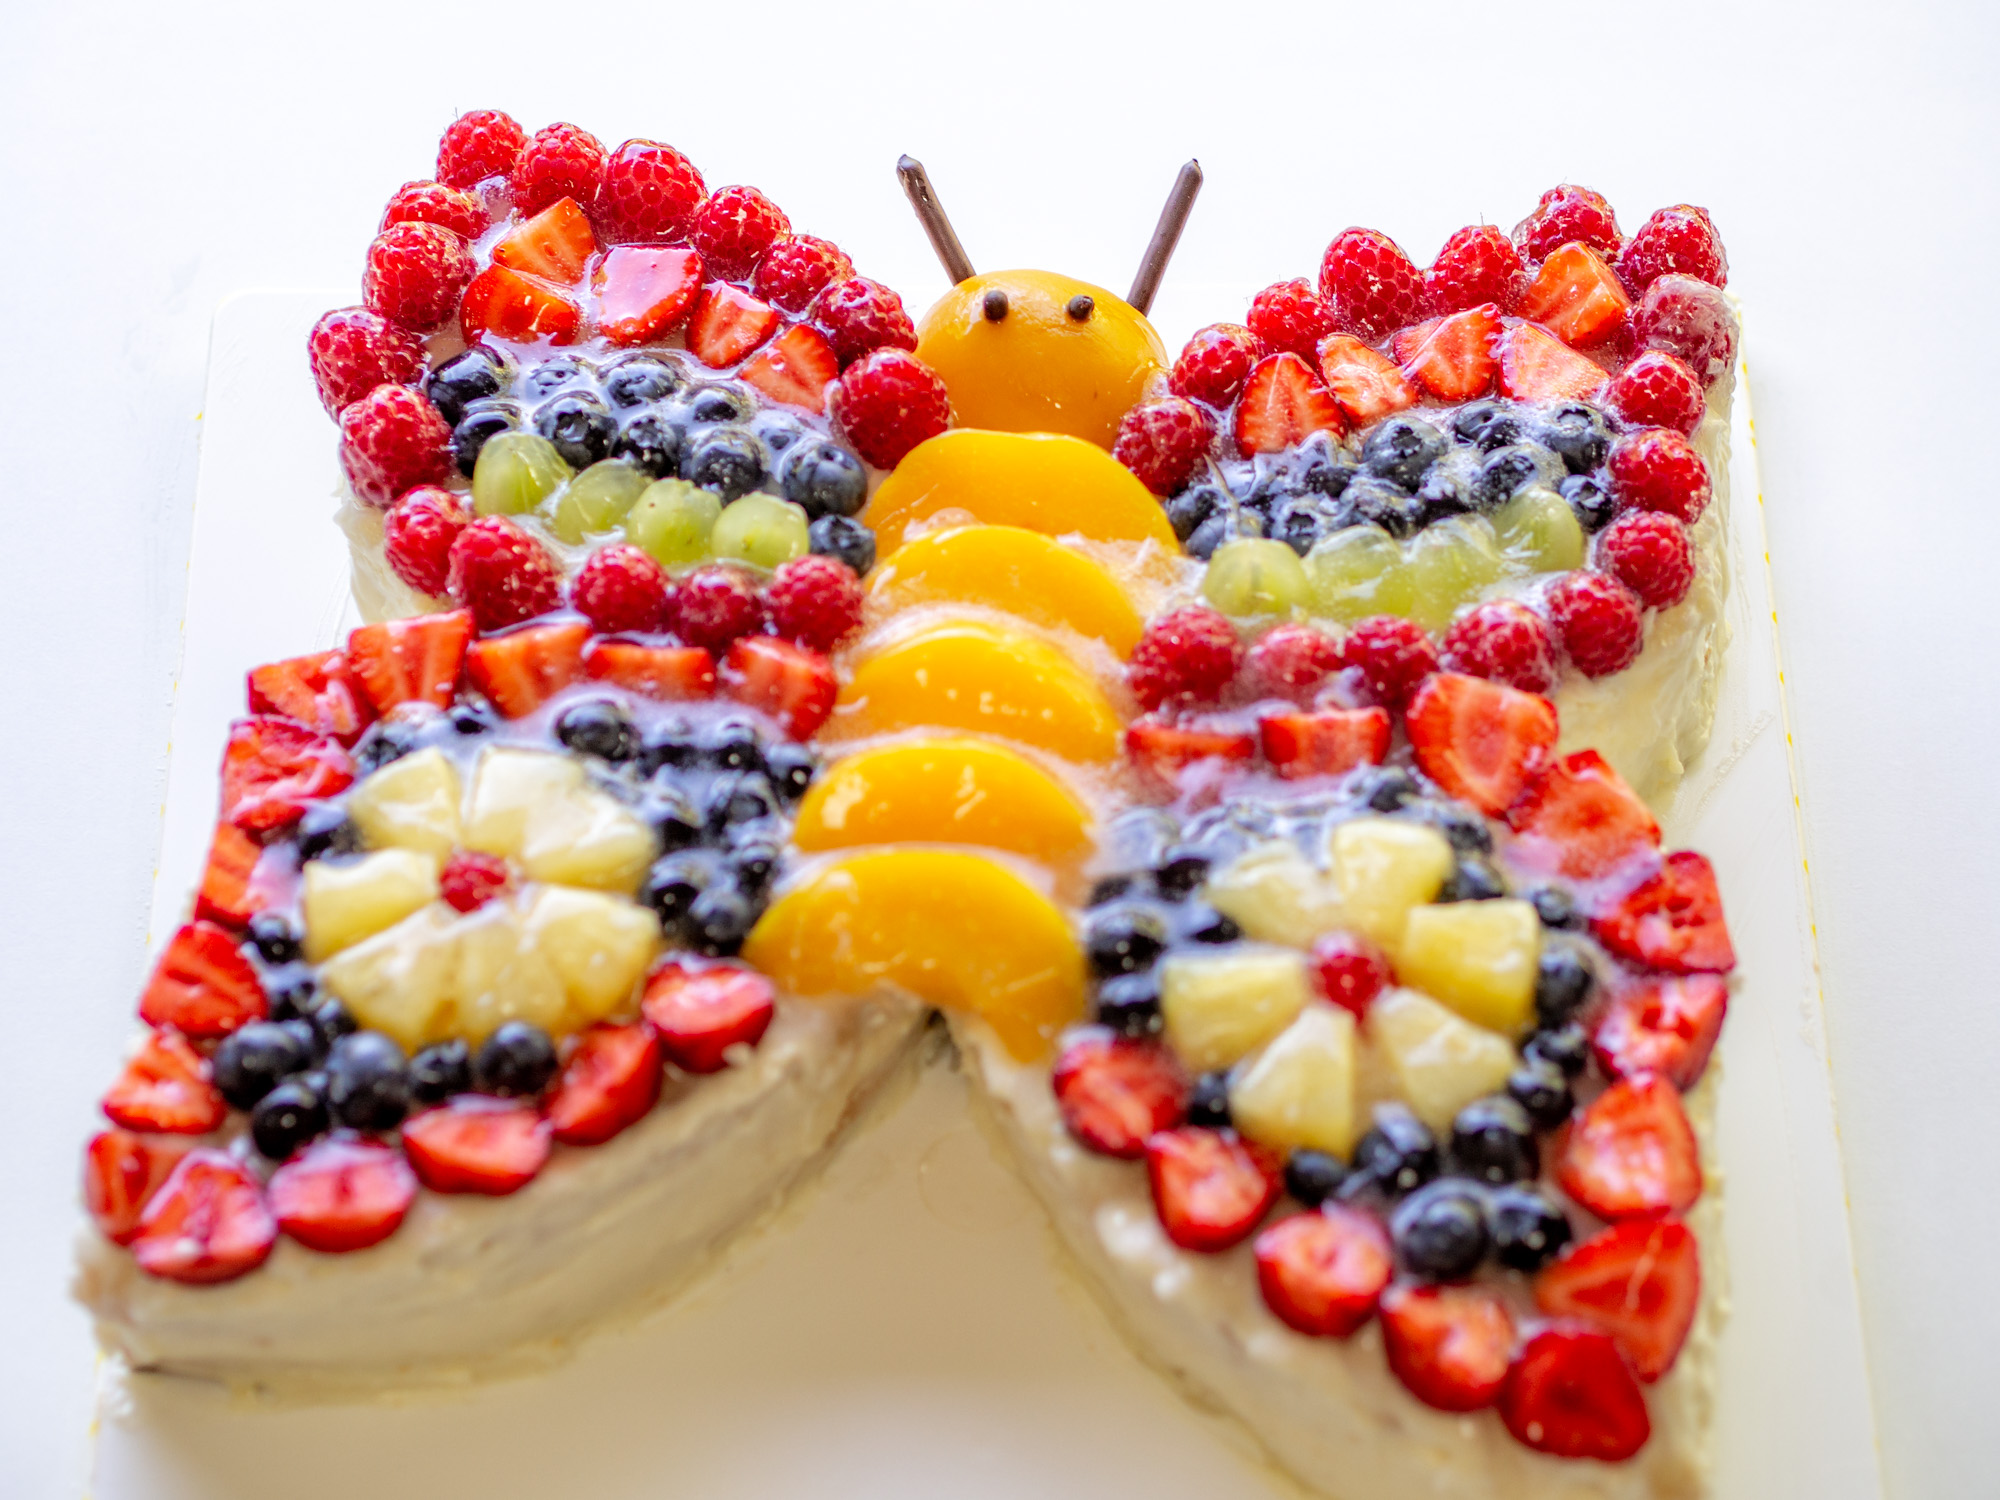 Bunter Schmetterlingstorte Mit Viel Obst Dekoriert Perfekt Fur Kinder